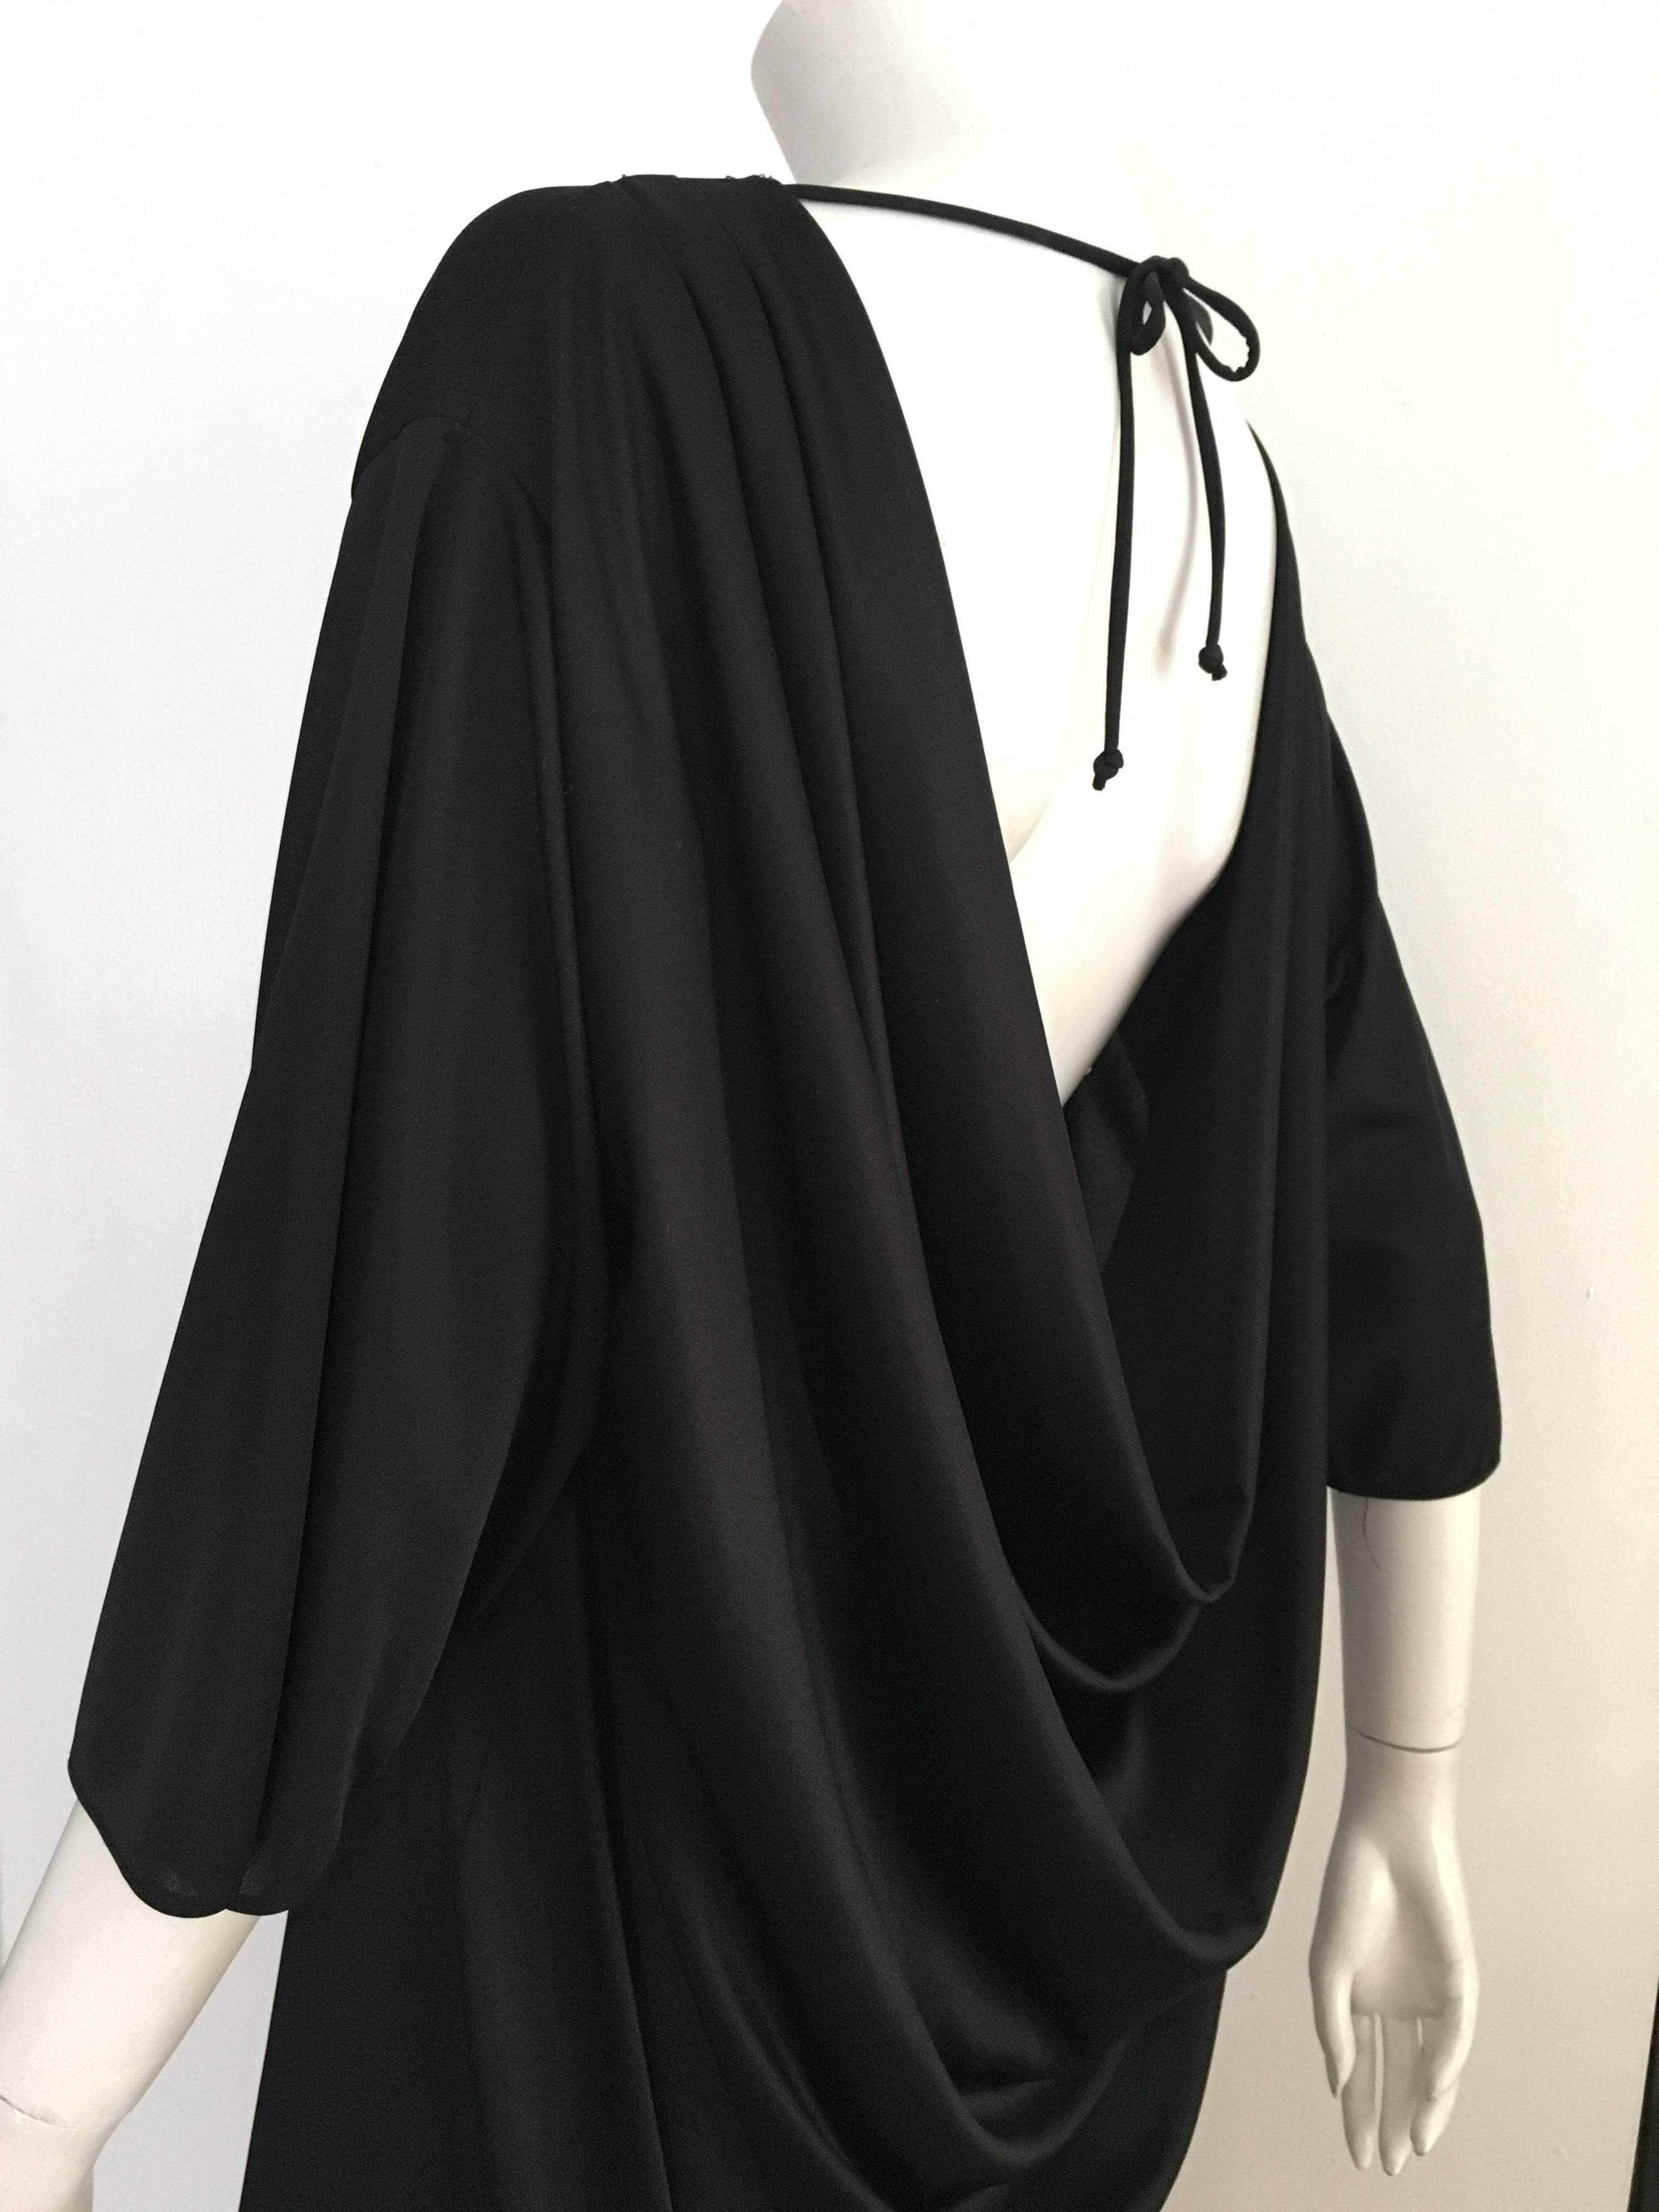 Bill Blass 1970s Flowing Black Gown. For Sale 3